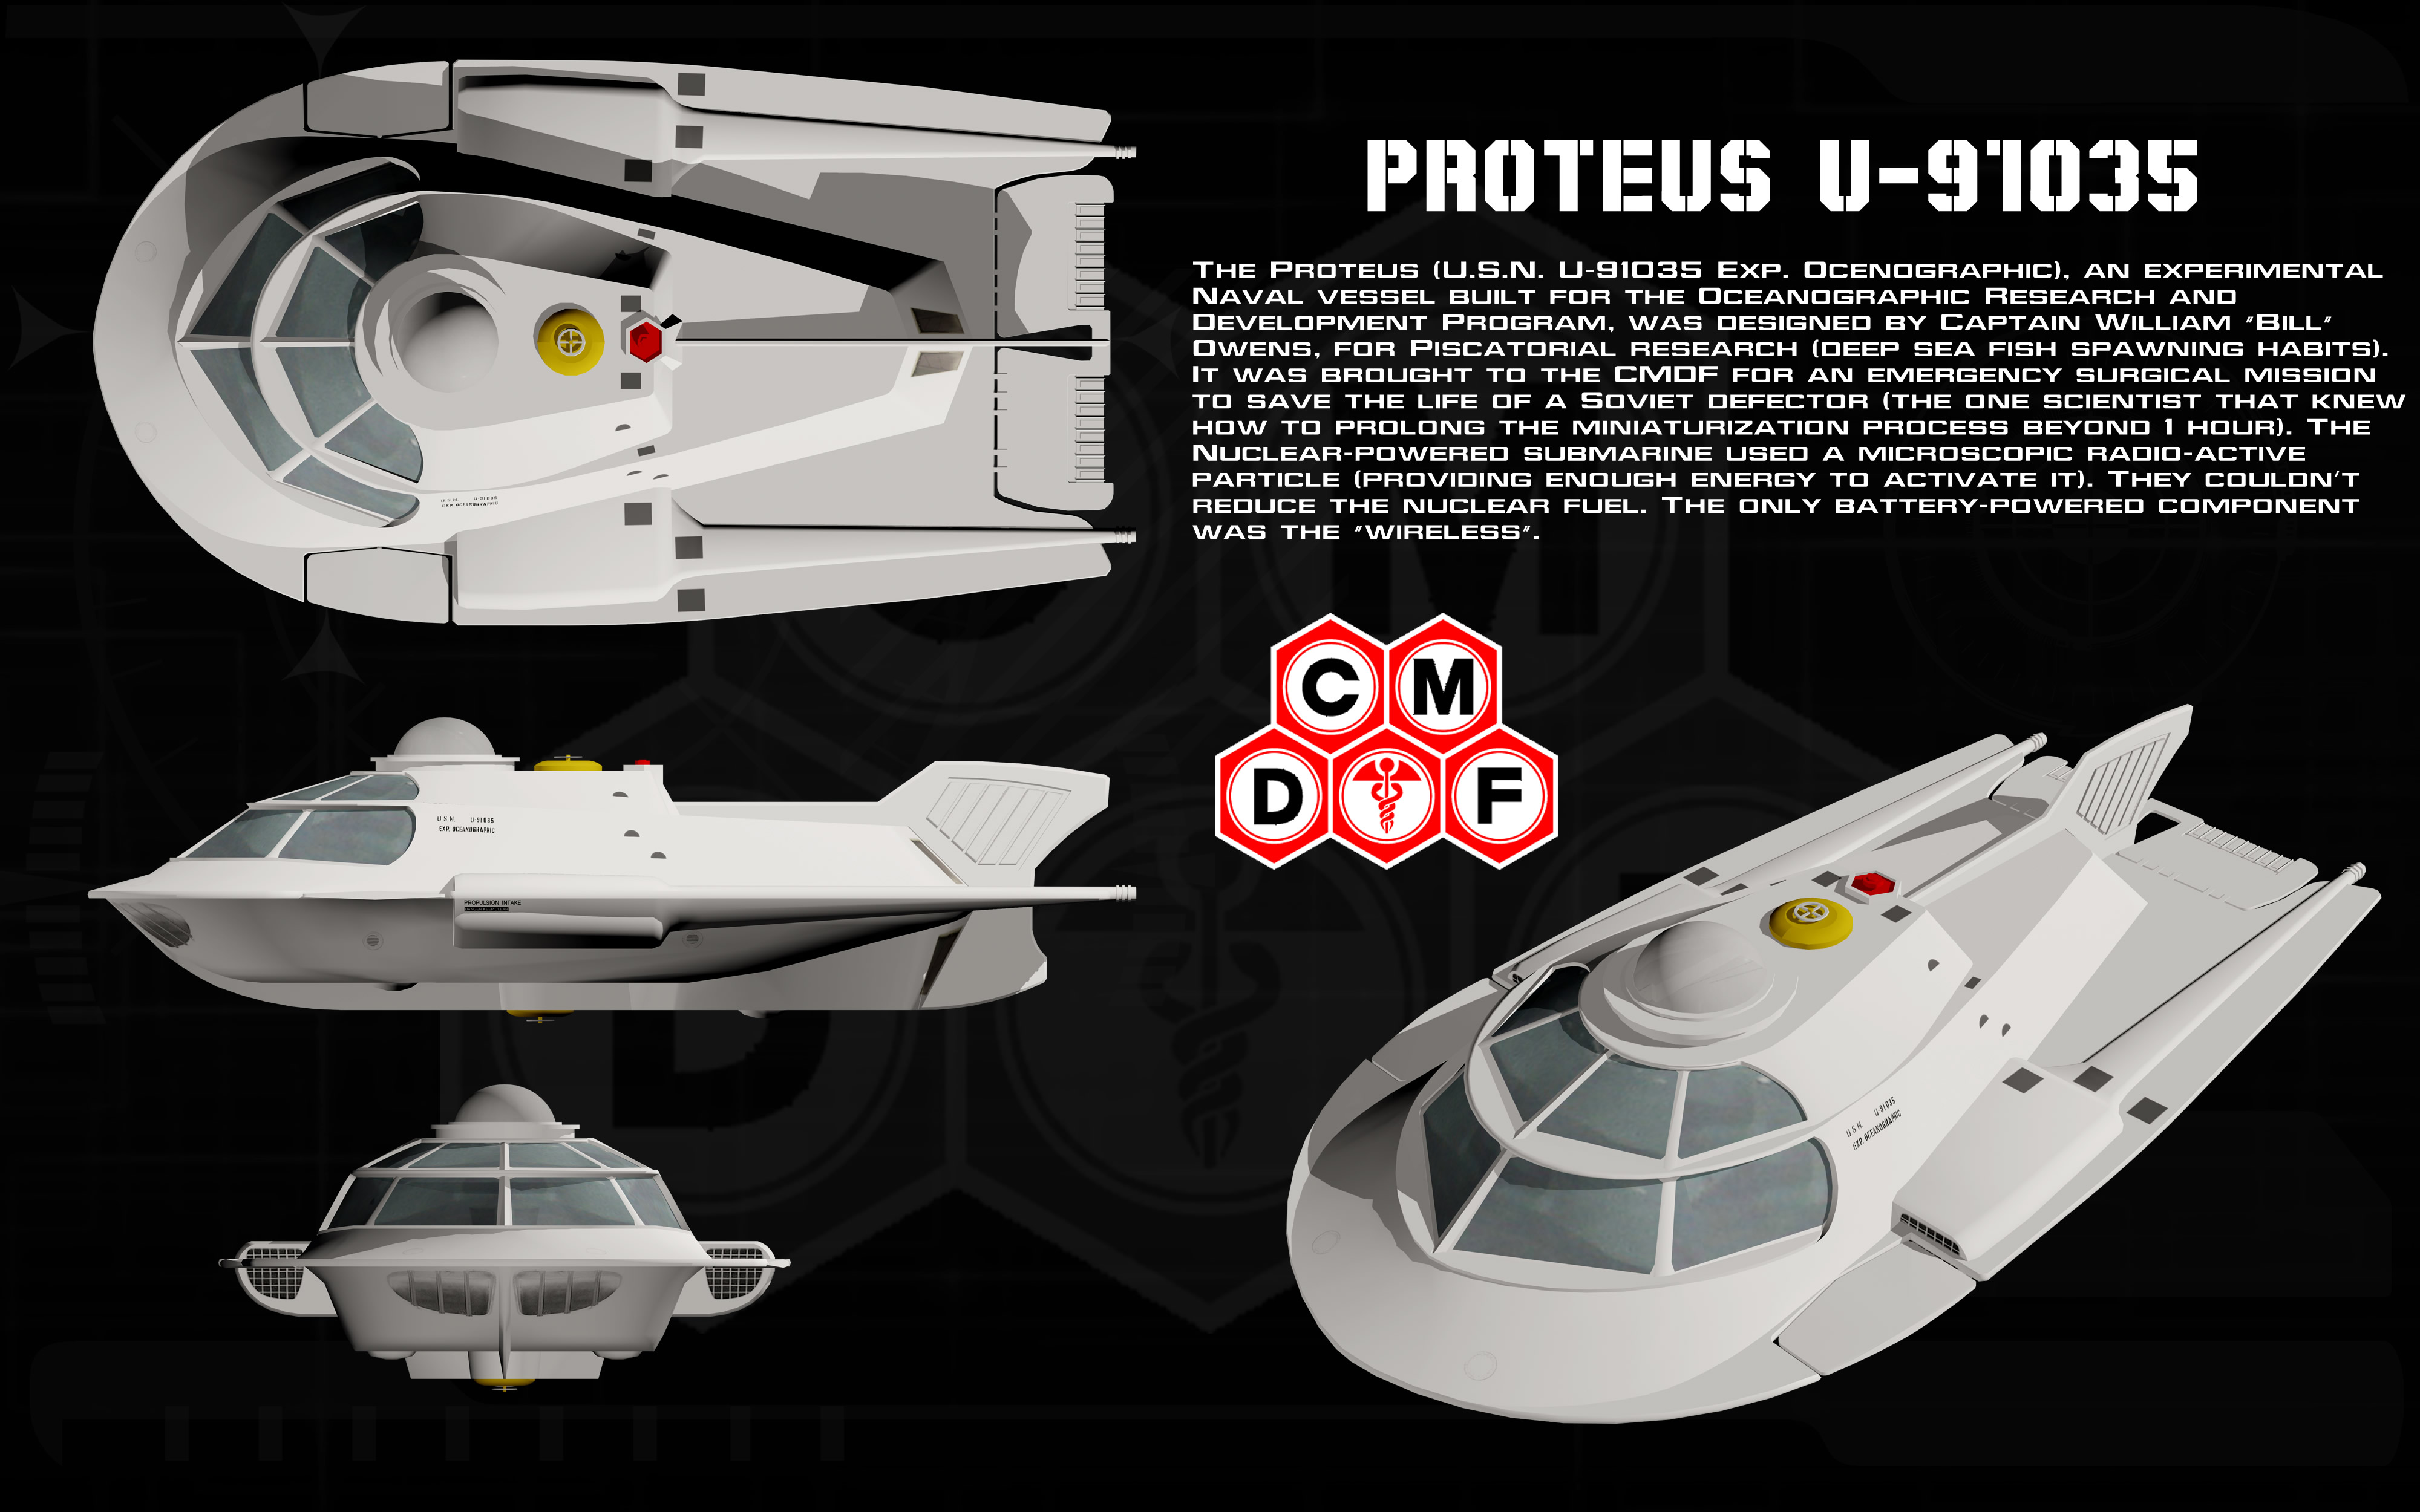 Proteus U-91035 ortho